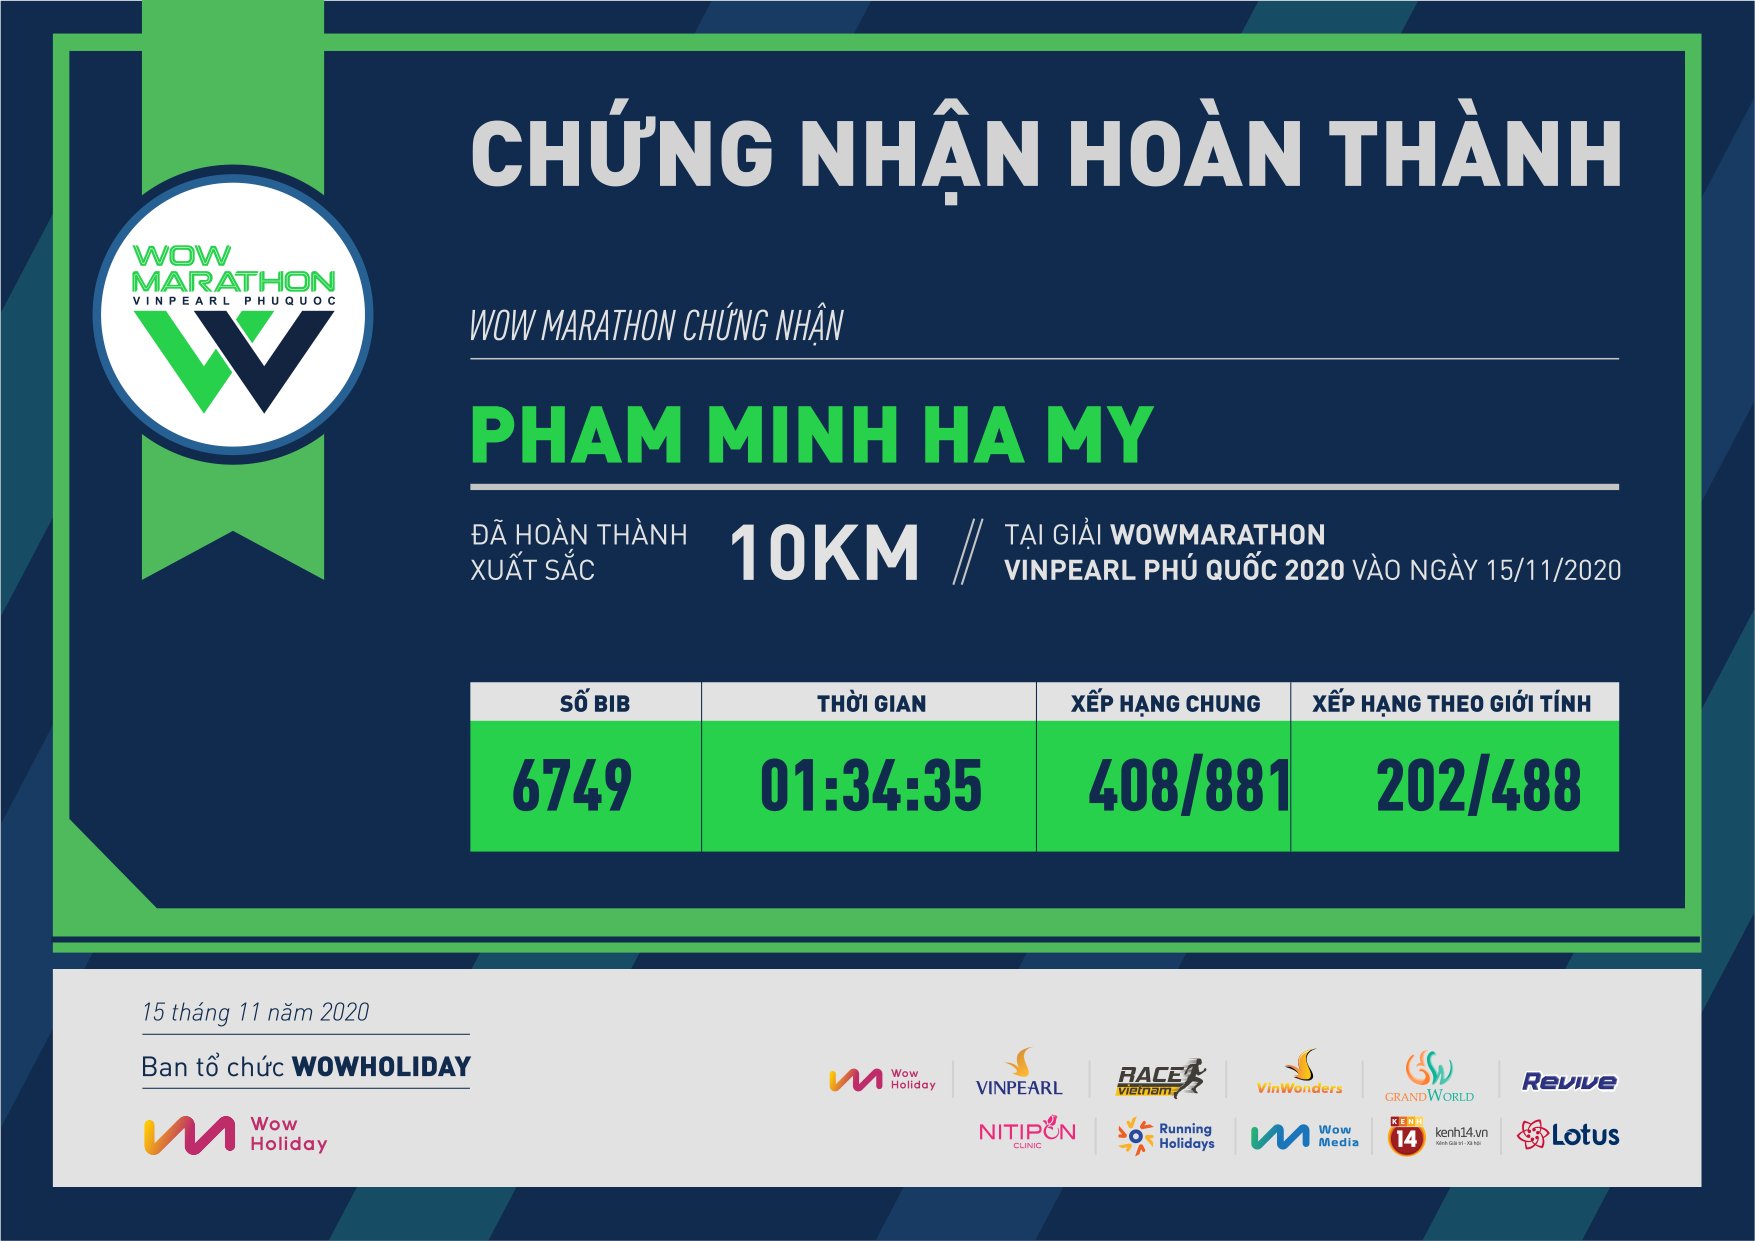 6749 - Pham Minh Ha My